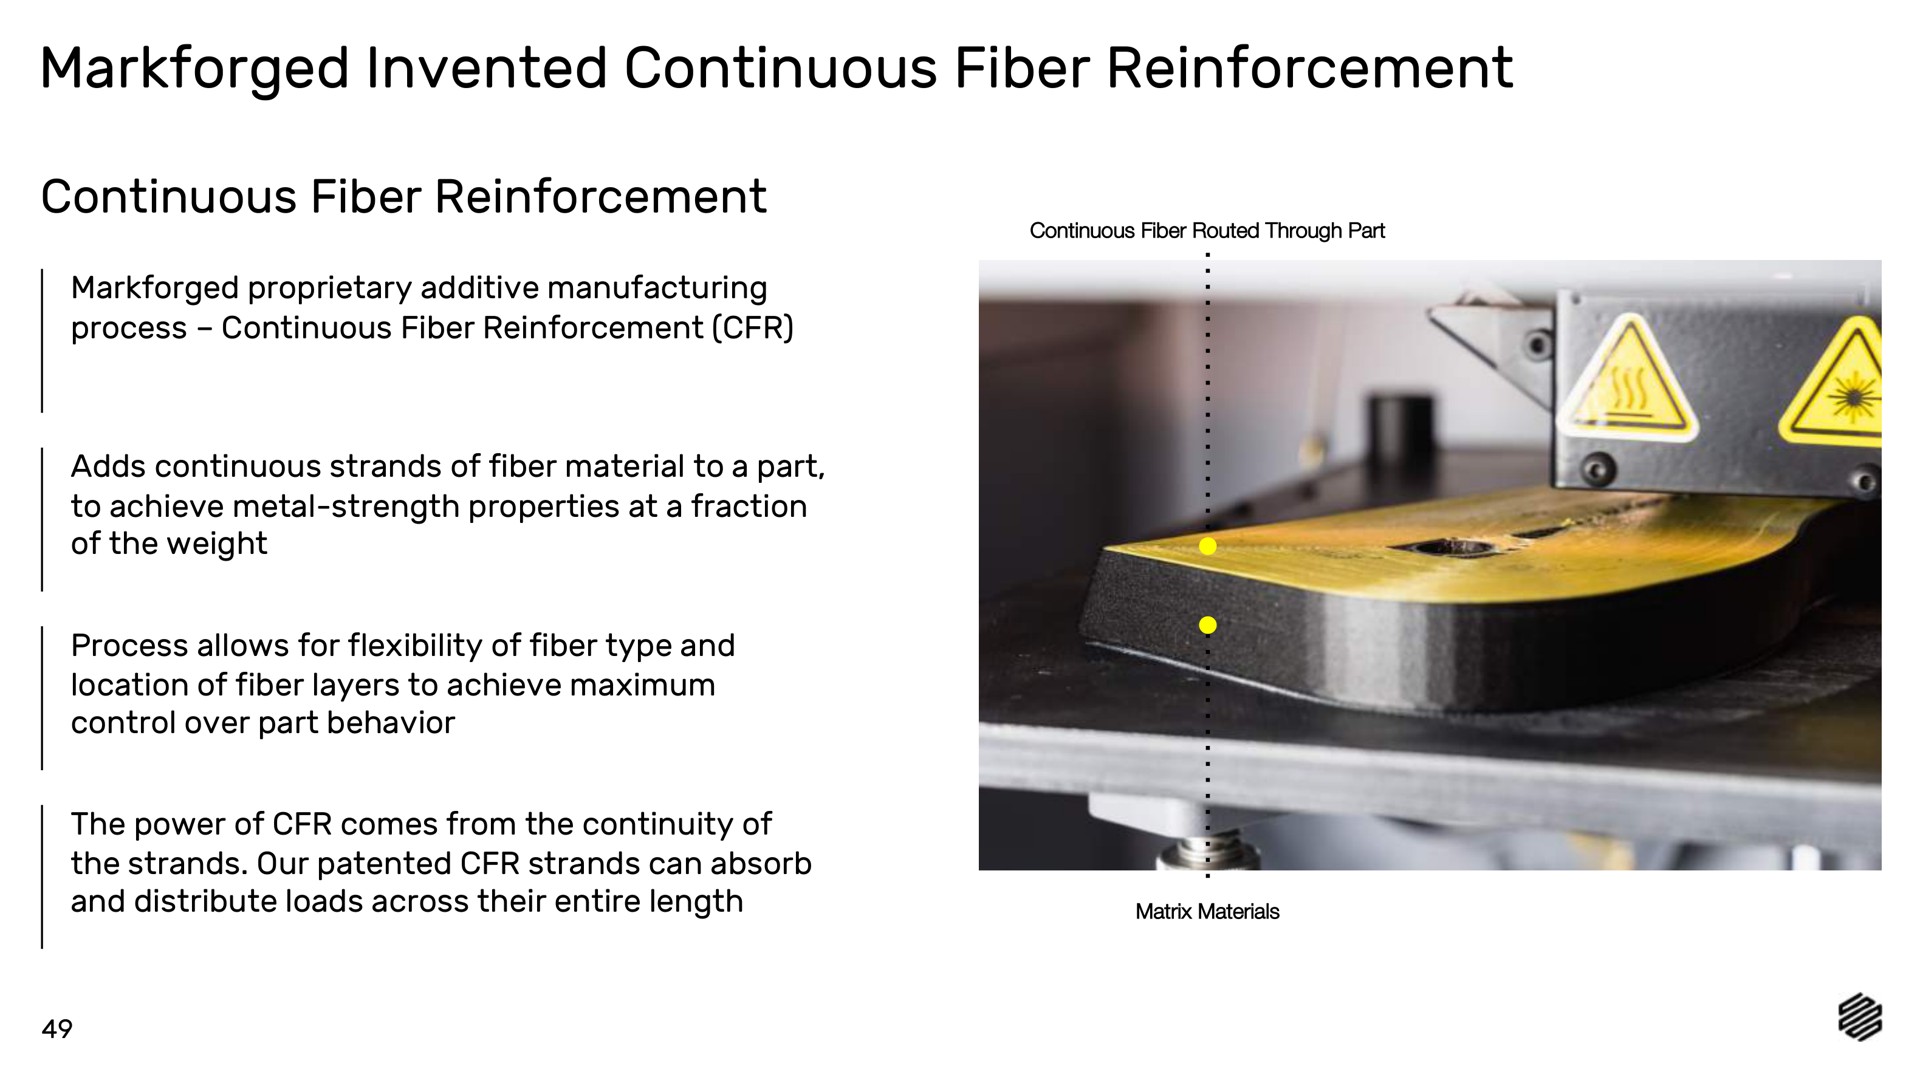 invented continuous fiber reinforcement continuous fiber reinforcement | Markforged